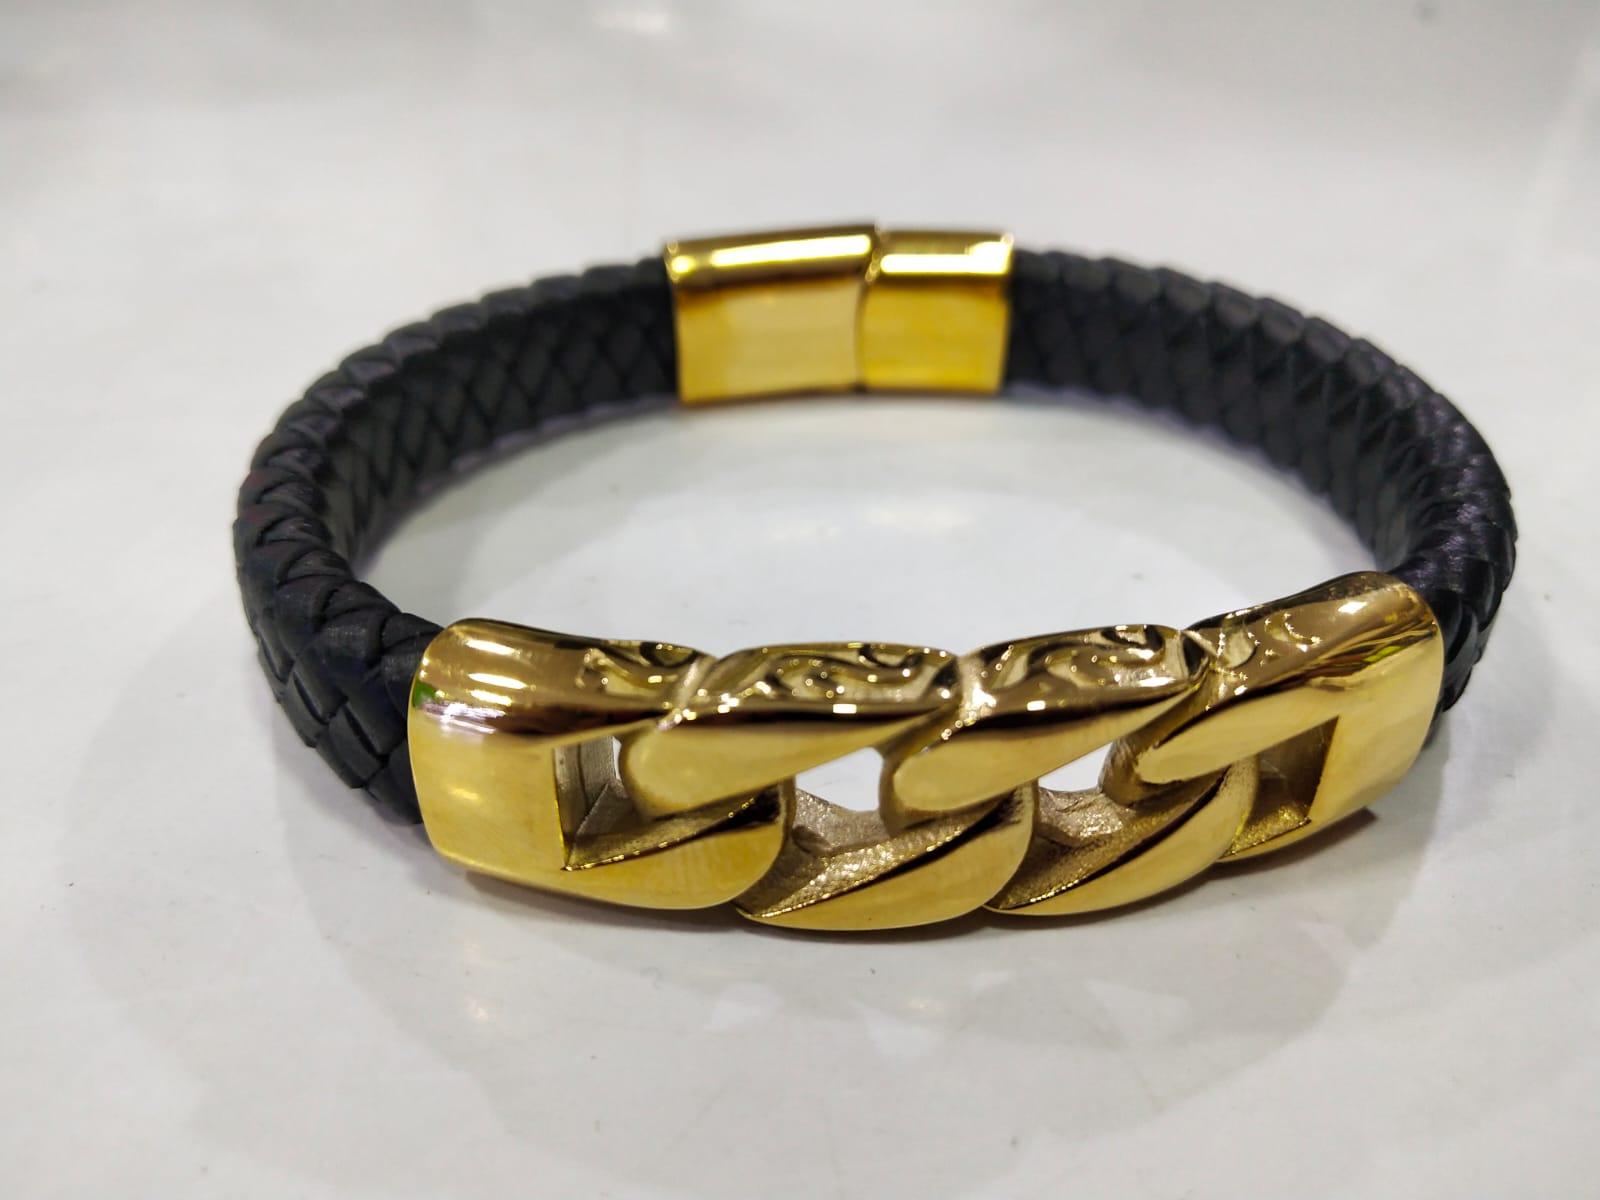 Stainless Steel Man Leather Bangle Bracelet with Gold Plating Huge Design